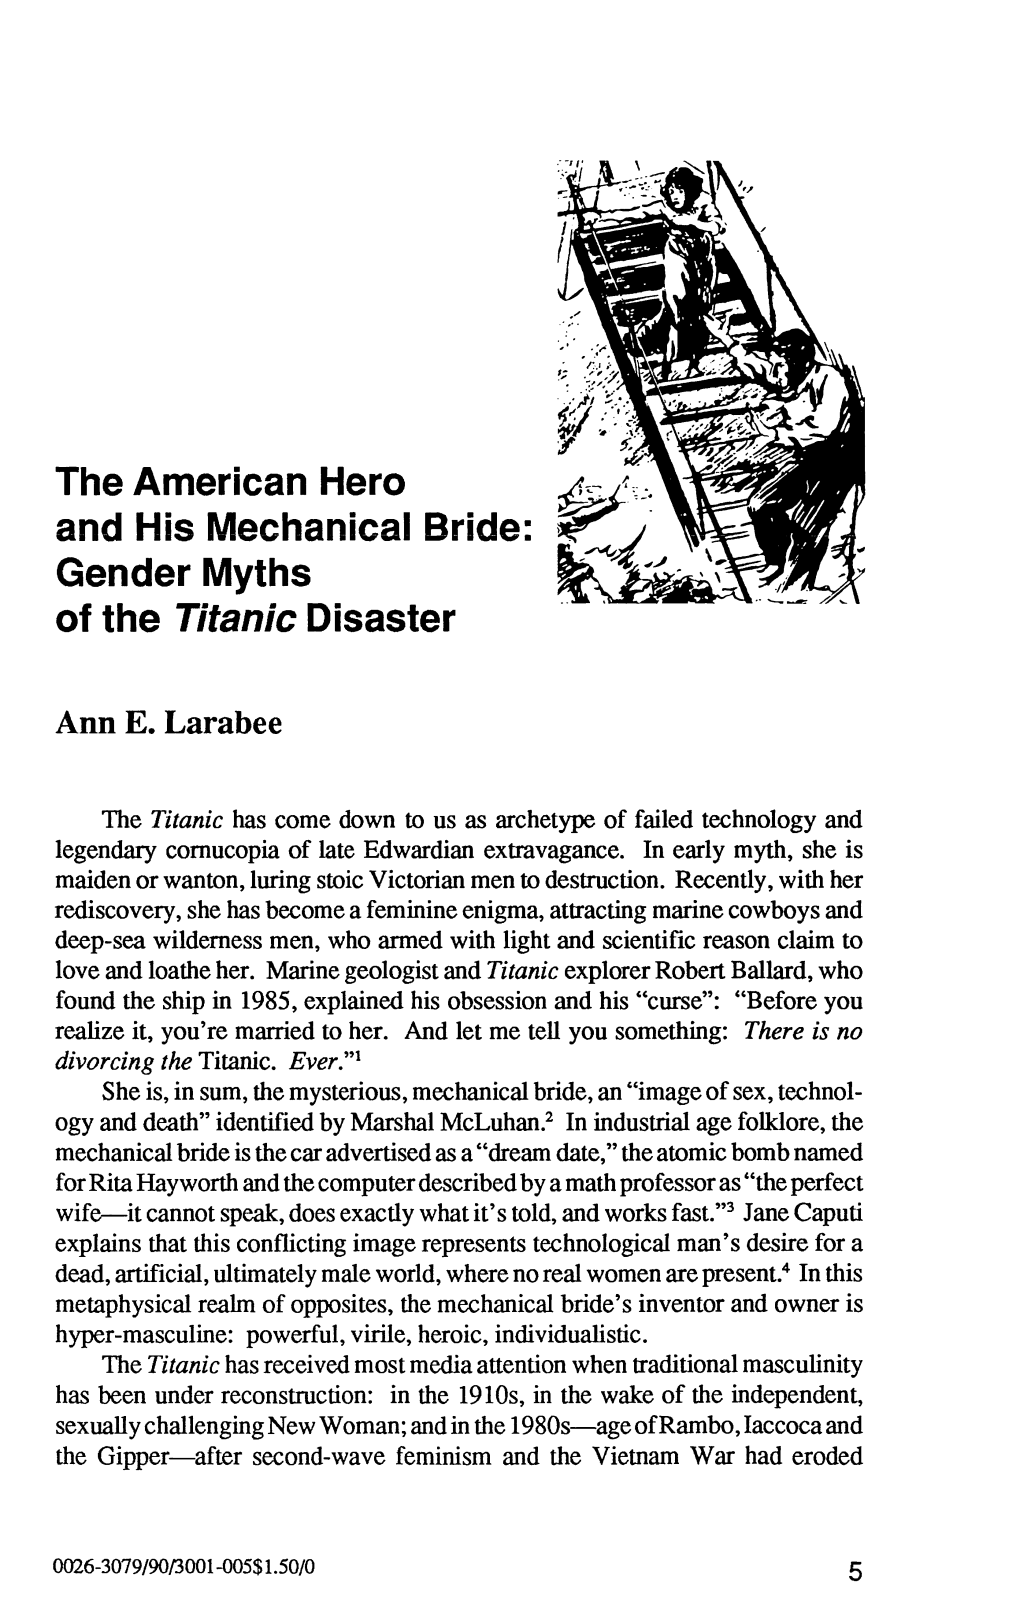 Gender Myths of the Titanic Disaster